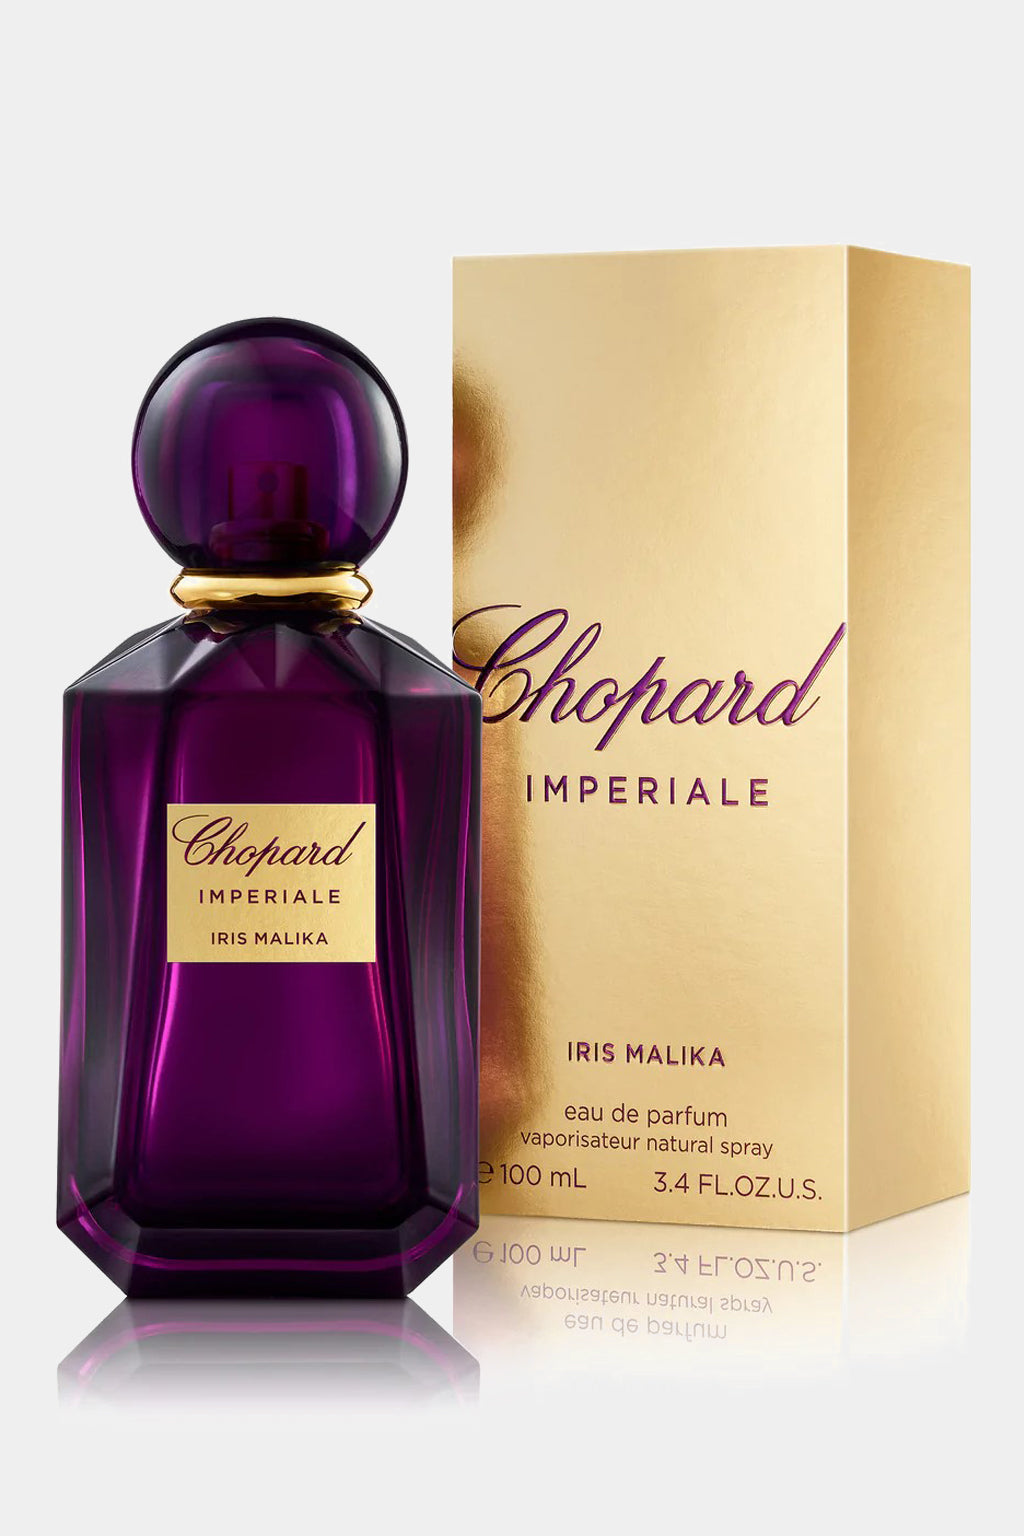 Chopard - Imperial Iris Malika Eau de Parfum